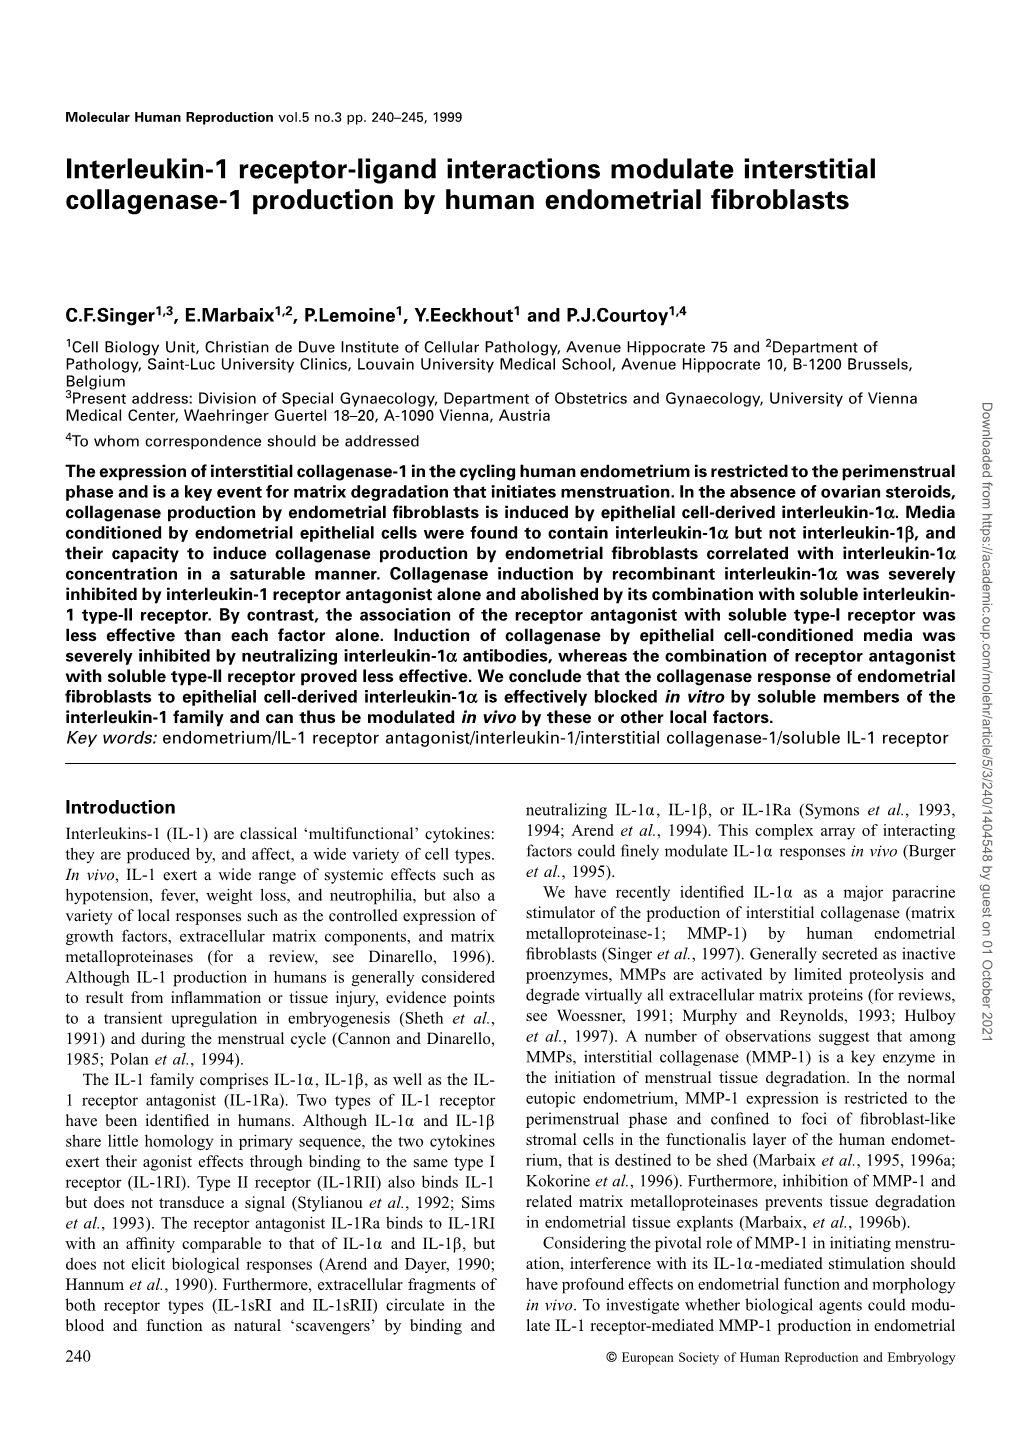 Interleukin-1 Receptor-Ligand Interactions Modulate Interstitial Collagenase-1 Production by Human Endometrial ﬁbroblasts